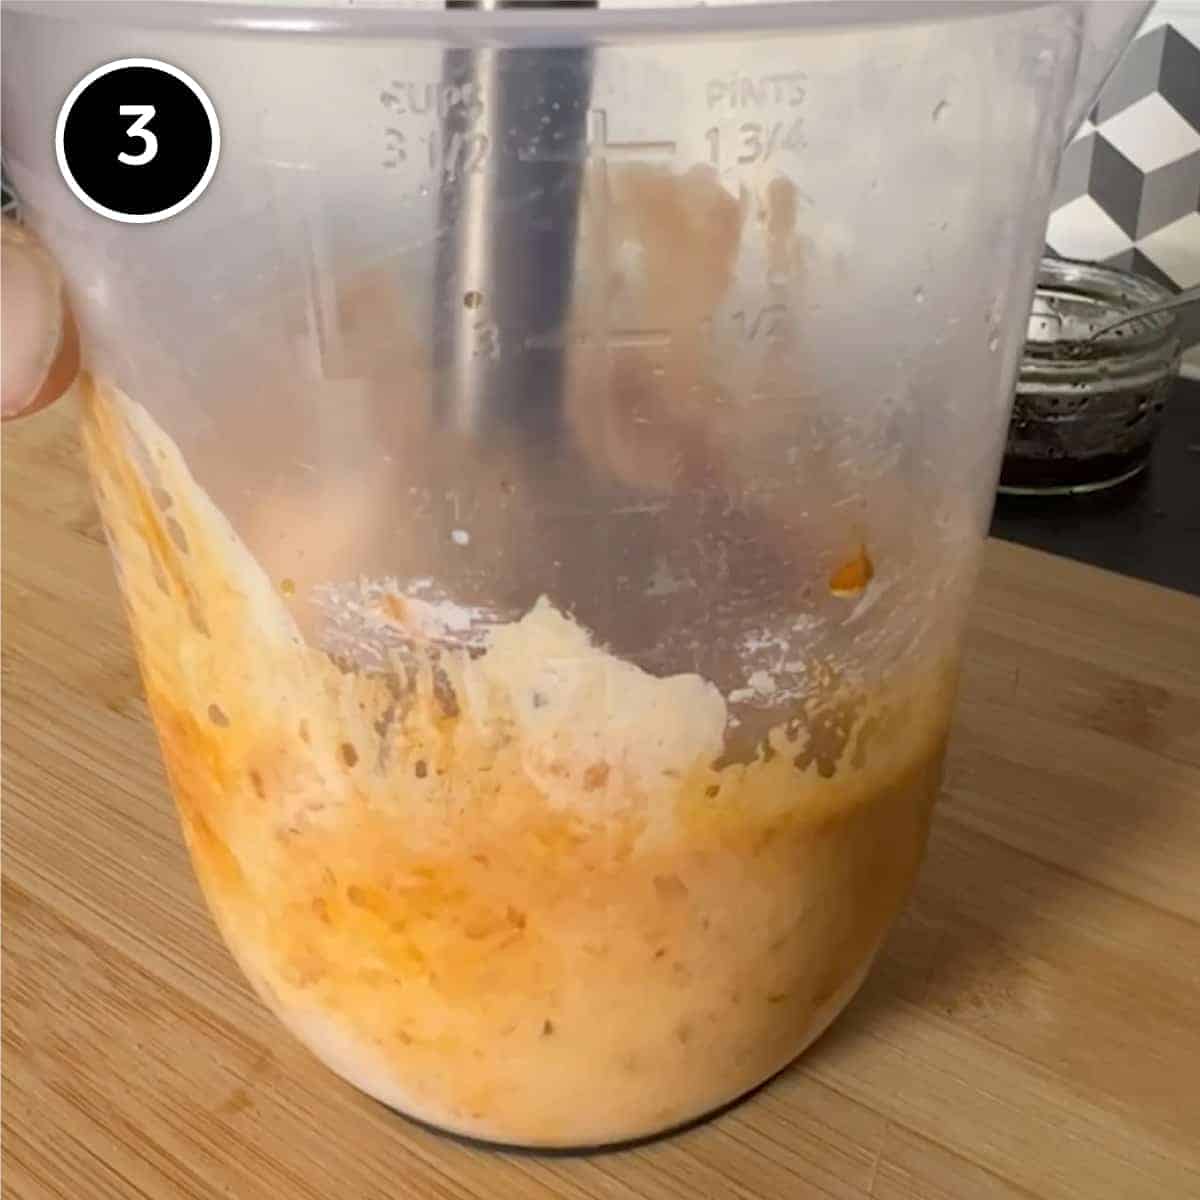 blending Circassian walnut sauce with a stick blender in a plastic jug